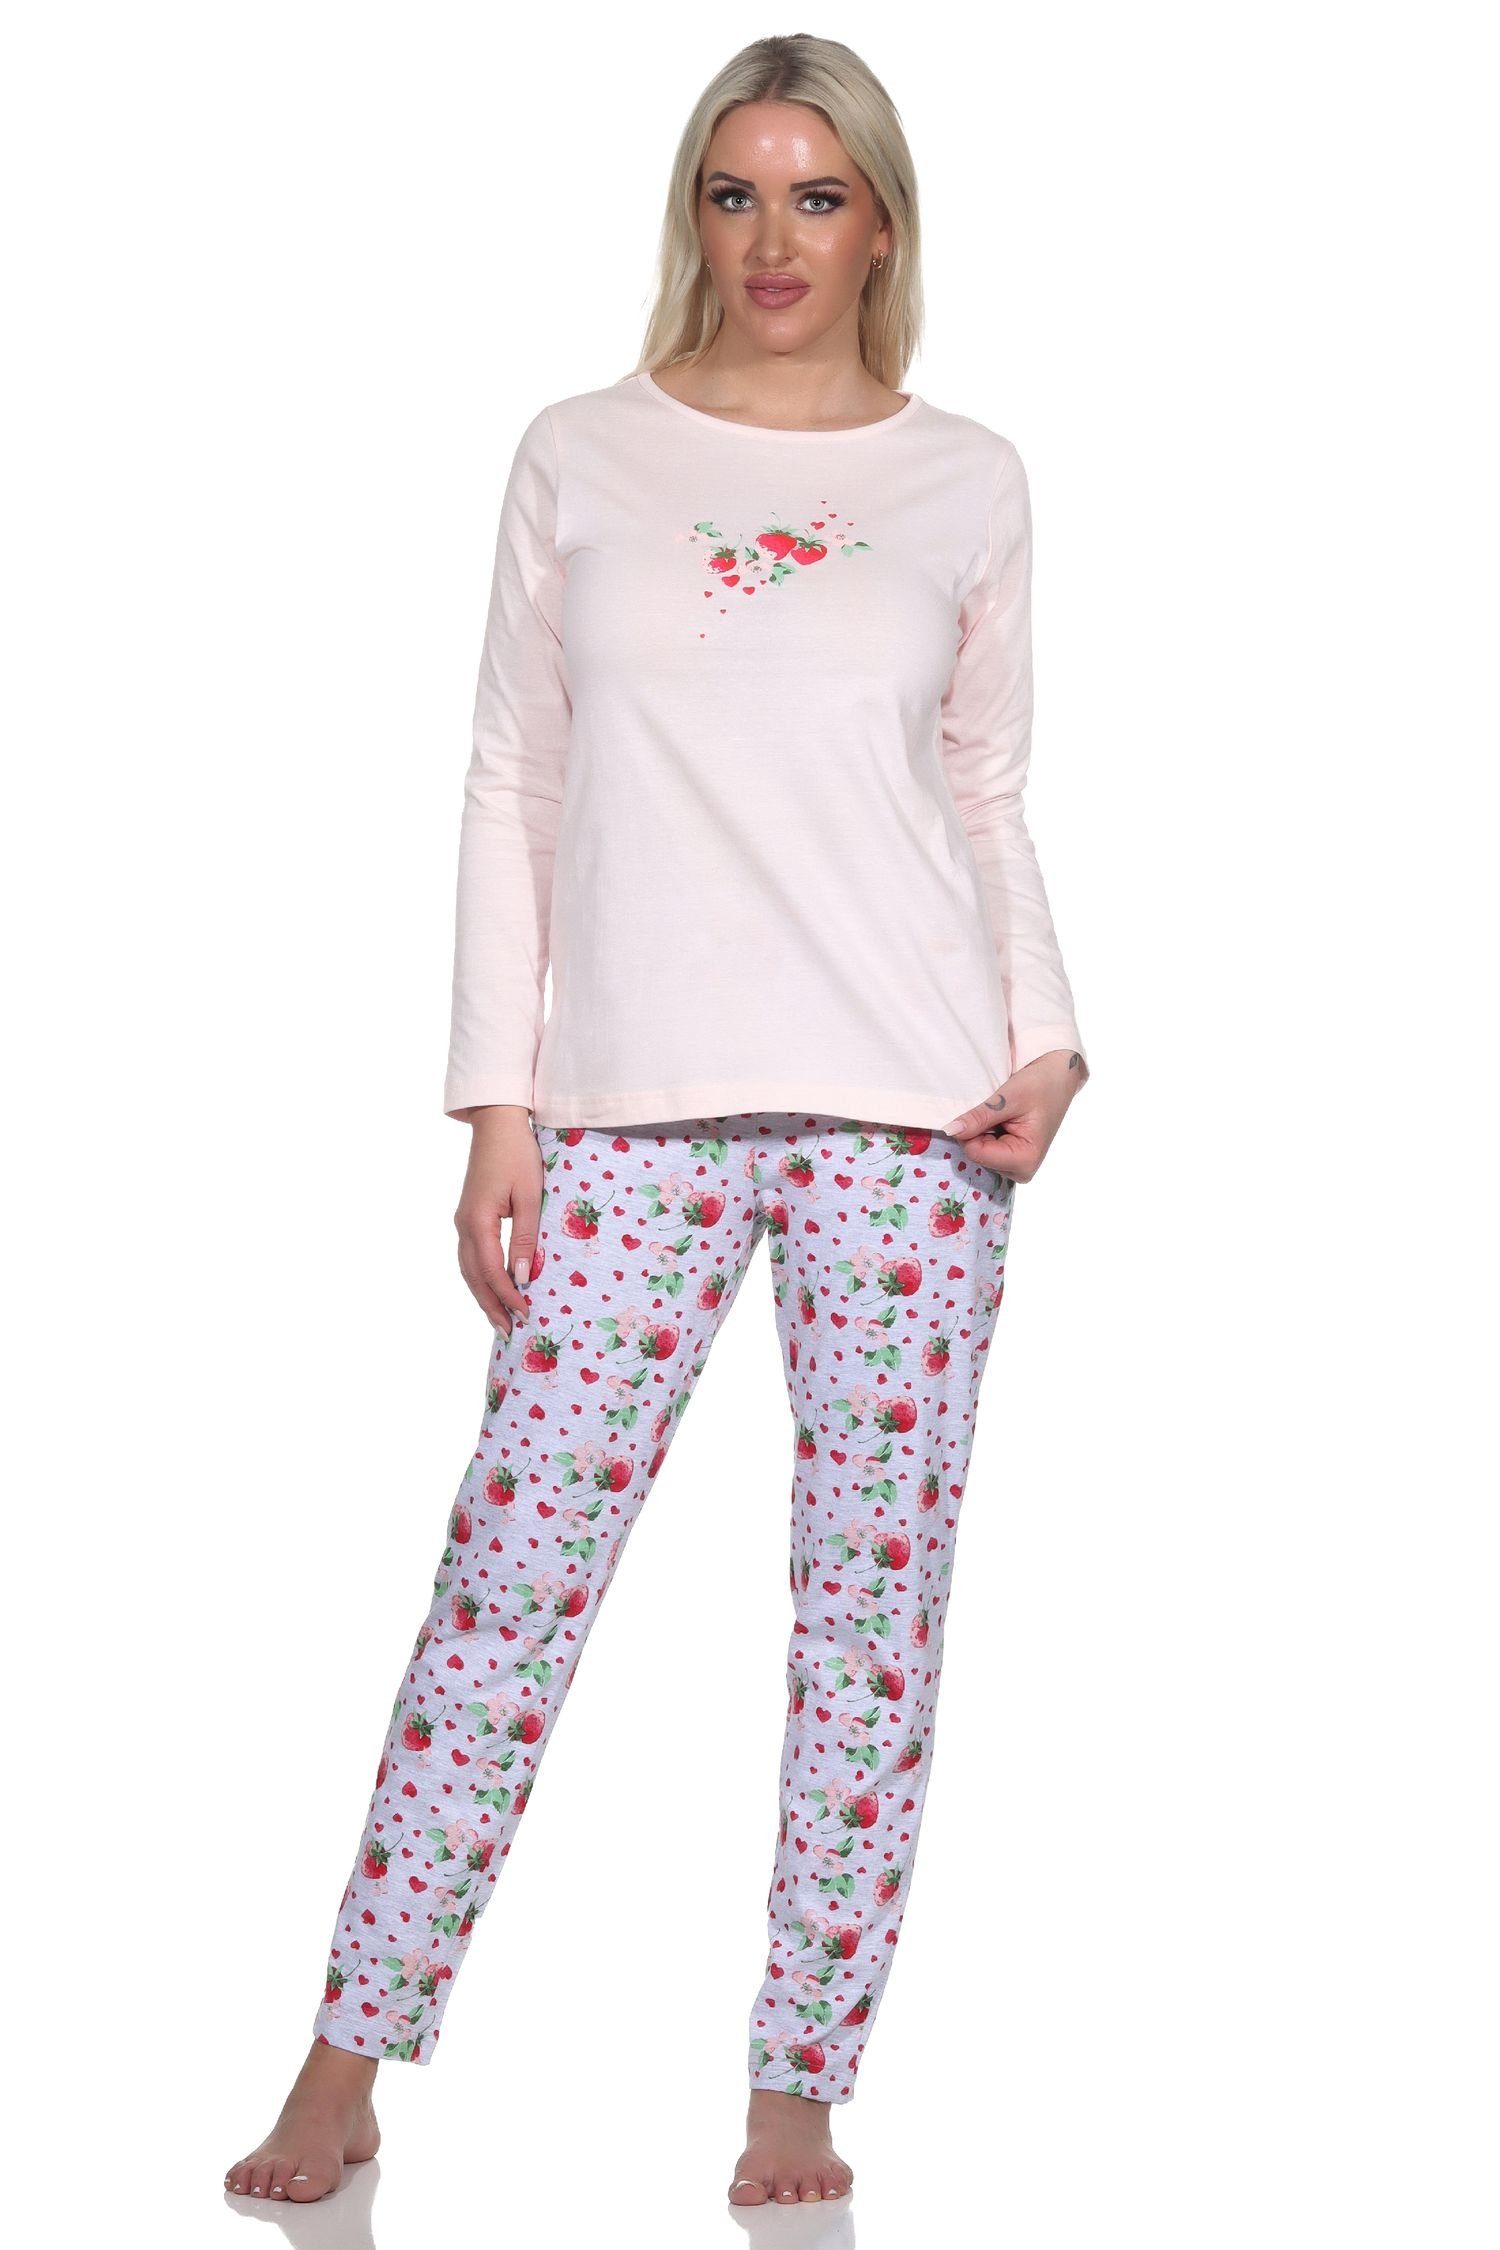 Erdbeeren Normann rosa langarm Pyjama Schlafanzug Damen mit Motiv Süsser Pyjama als